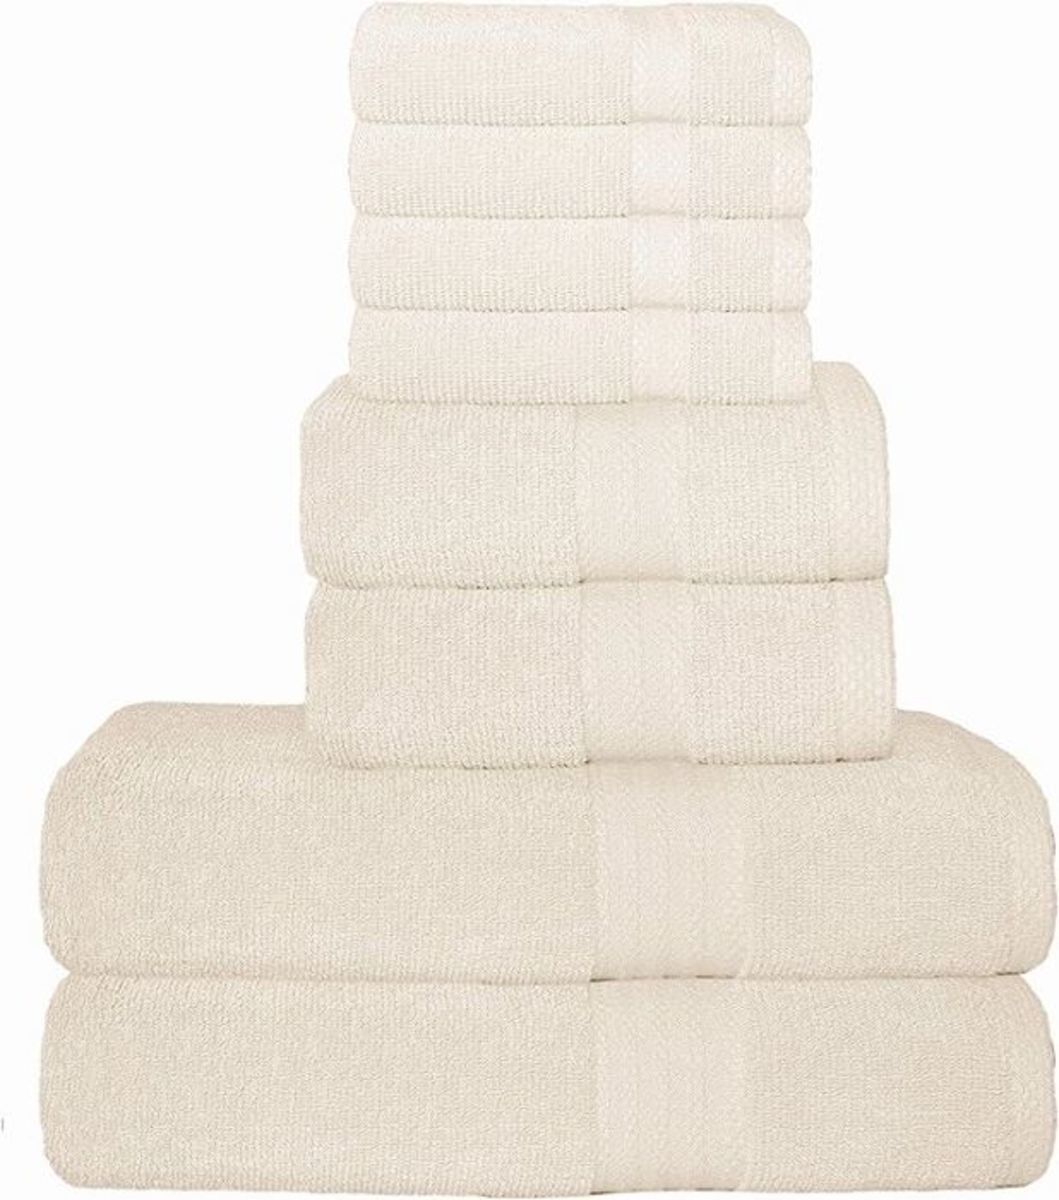 Heirloom Manor Sarajane 800 GSM Solid 8 Piece Bath Towel Set in Rainy Day